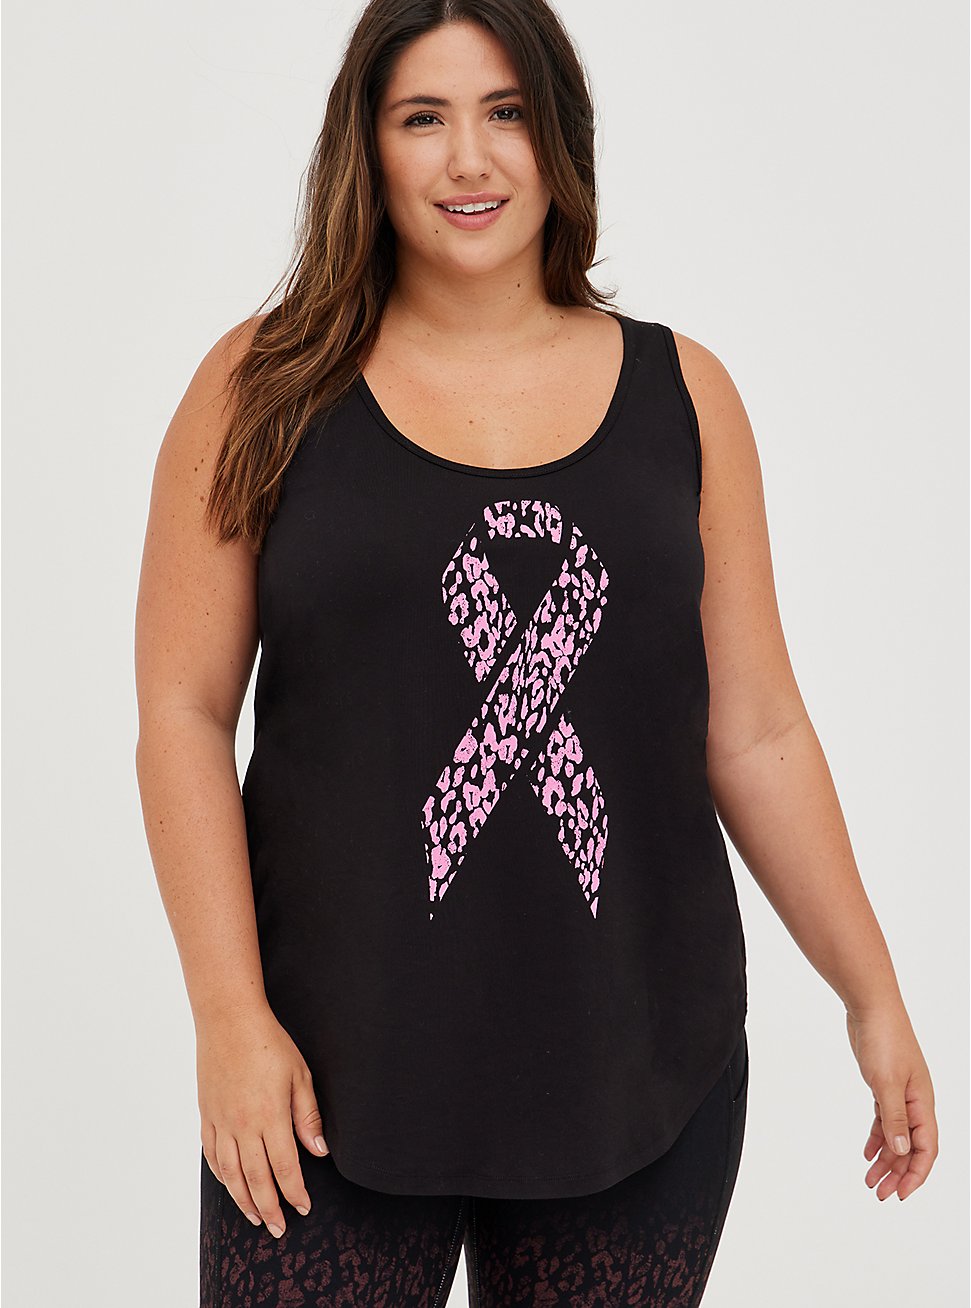 Breast Cancer Awareness Wicking Active Tank - Performance Cotton Ribbon Leopard Black, DEEP BLACK, hi-res